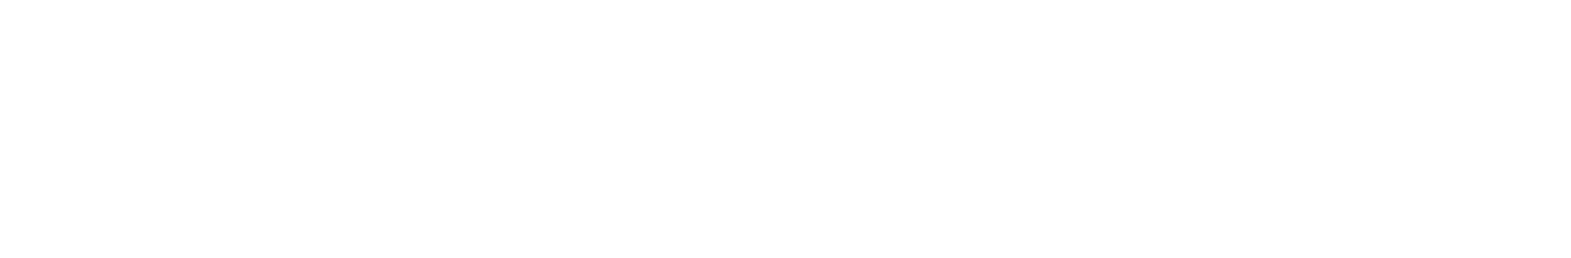 BB Biotech
 logo large for dark backgrounds (transparent PNG)